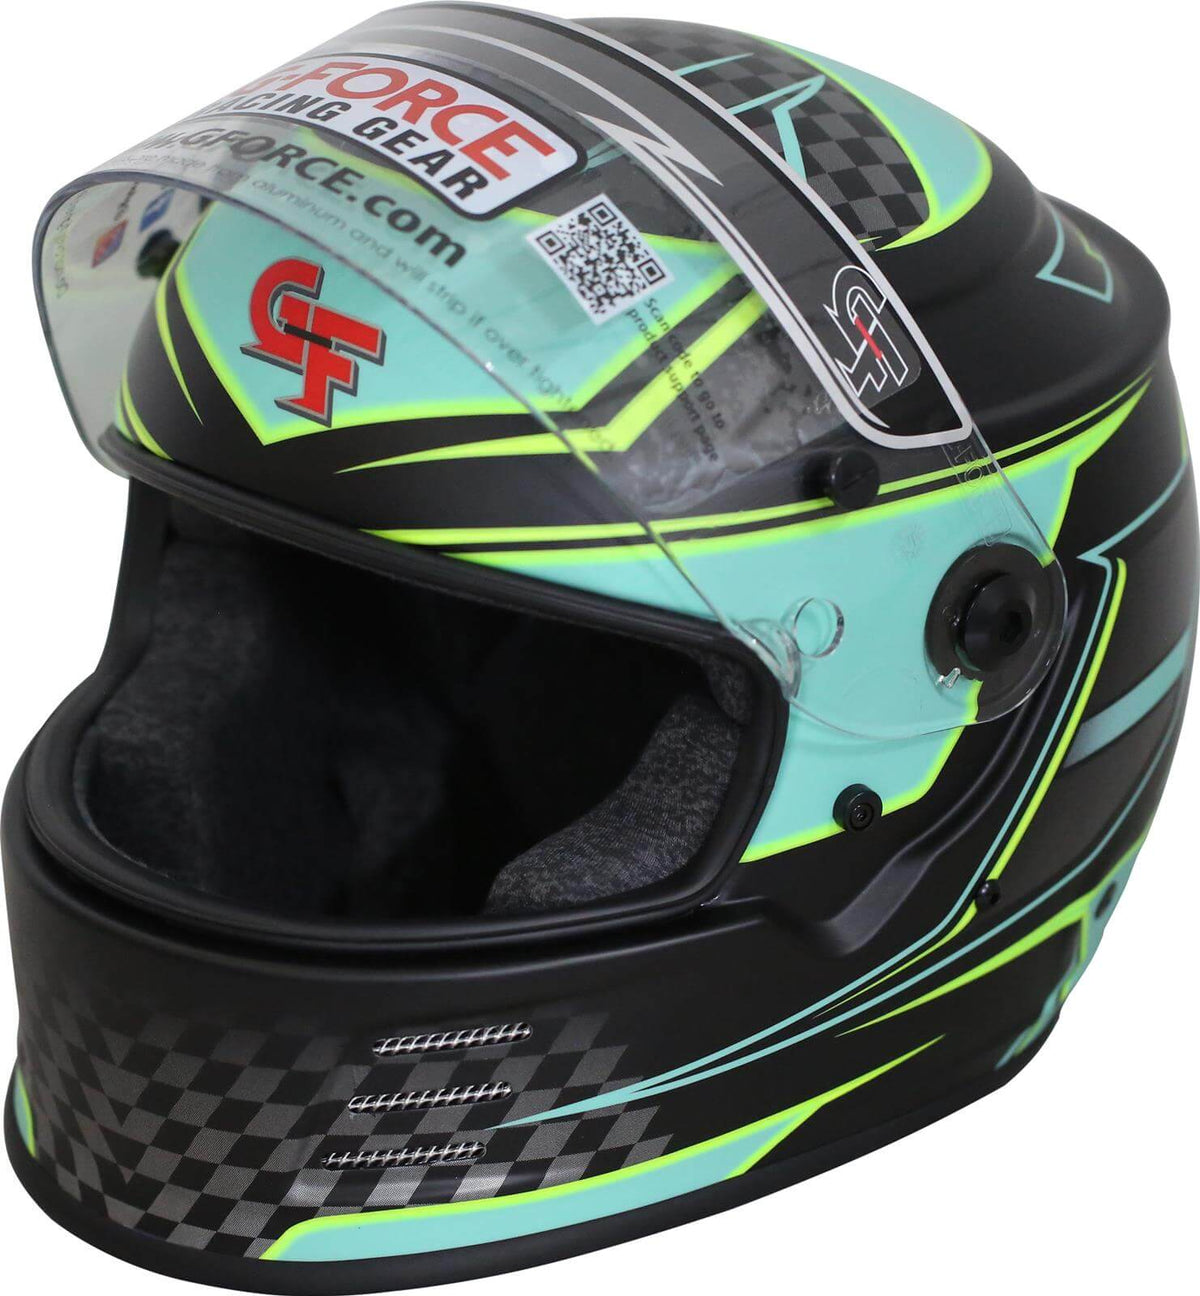 REVO GRAPHICS SA2020 Helmet - $364.65